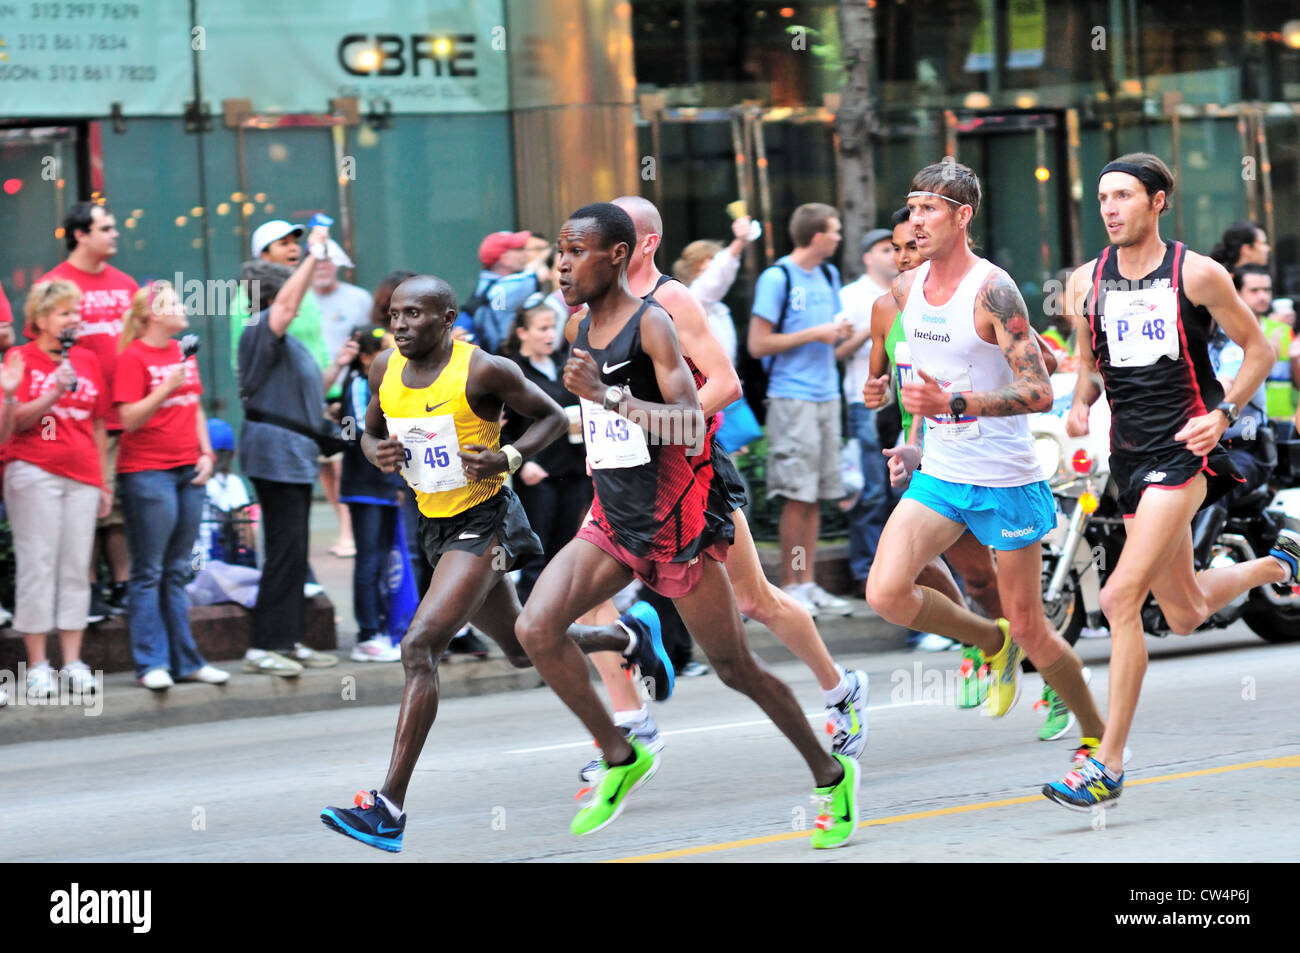 Marathon runners 2011 Chicago Marathon. elite marathon runner, Martin Fagan, of Ireland, second from right. Stock Photo